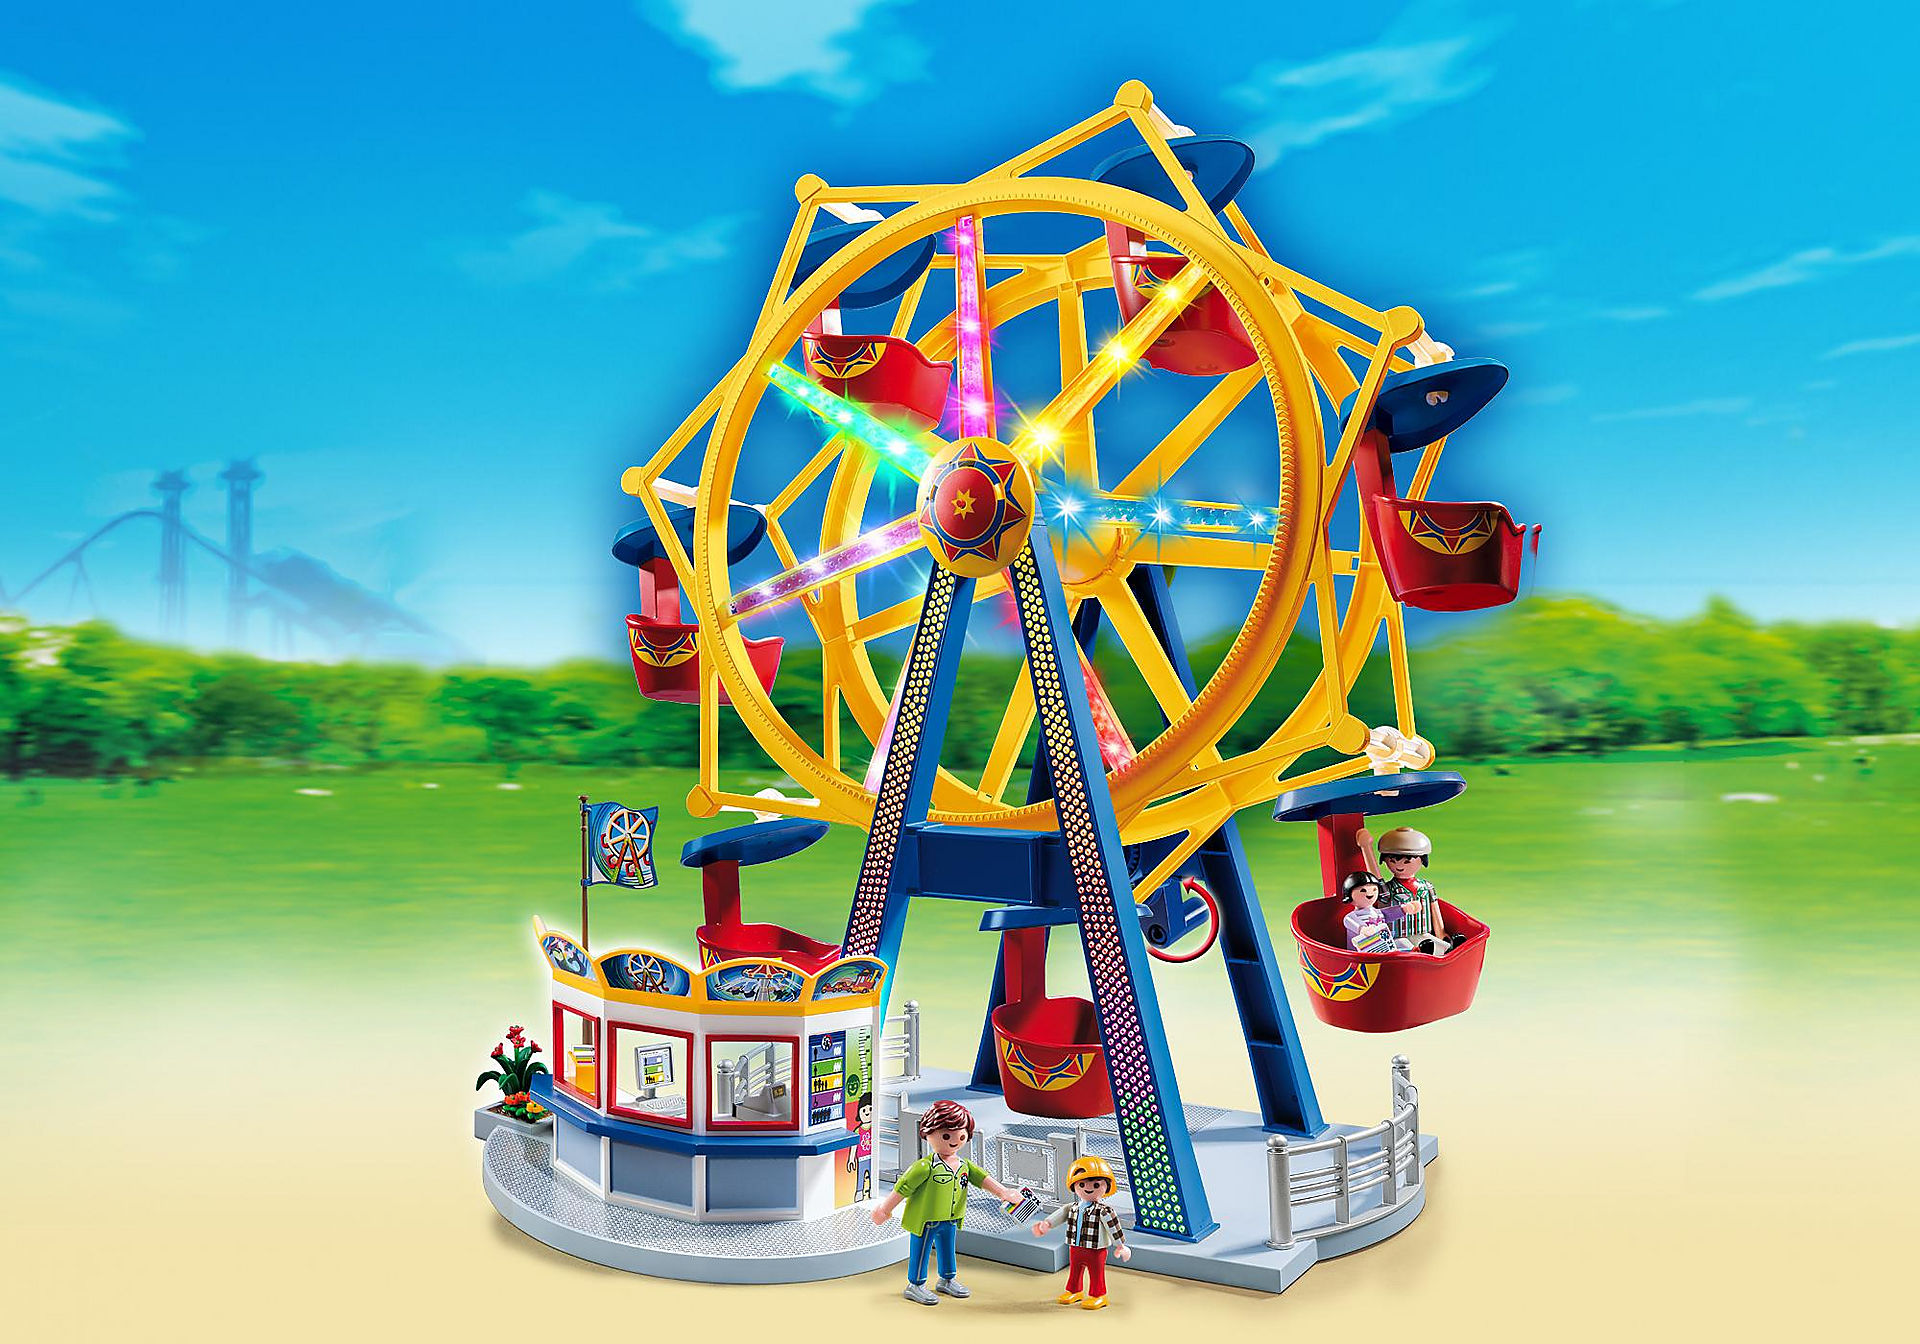 5552 Ferris Wheel with Lights zoom image1